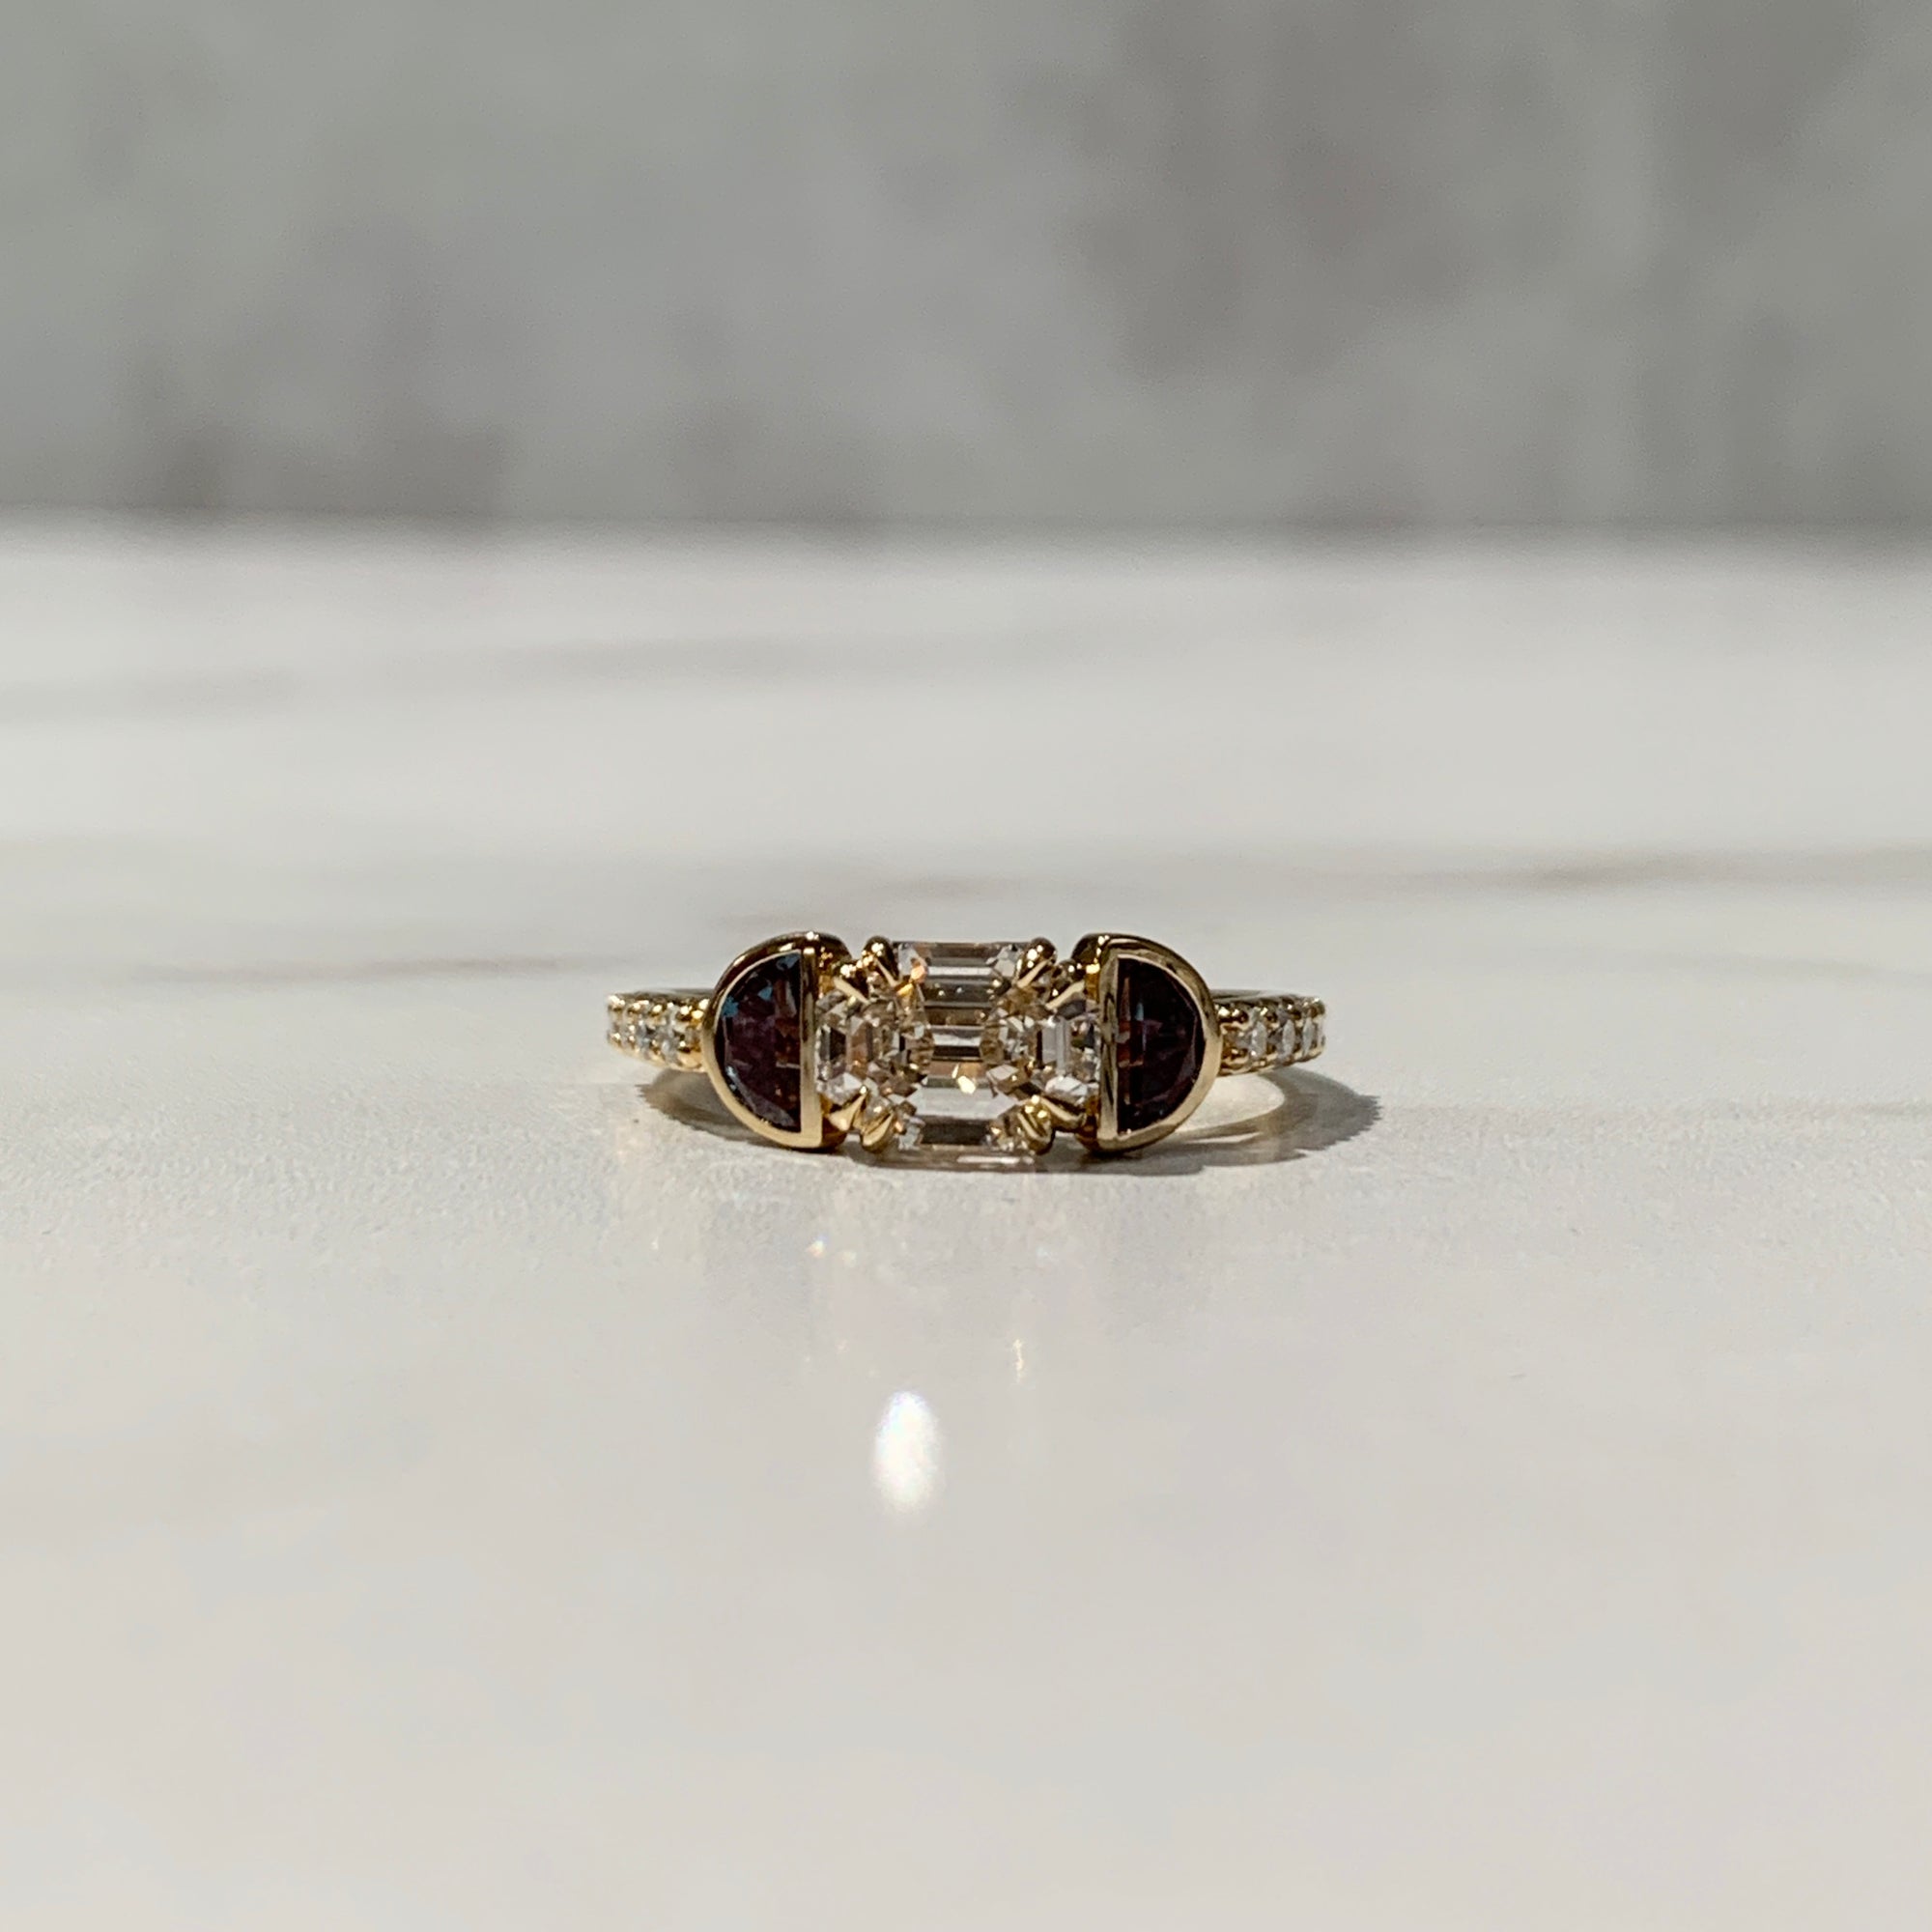 Three-Stone engagement ring with half moon alexandrite gemstones